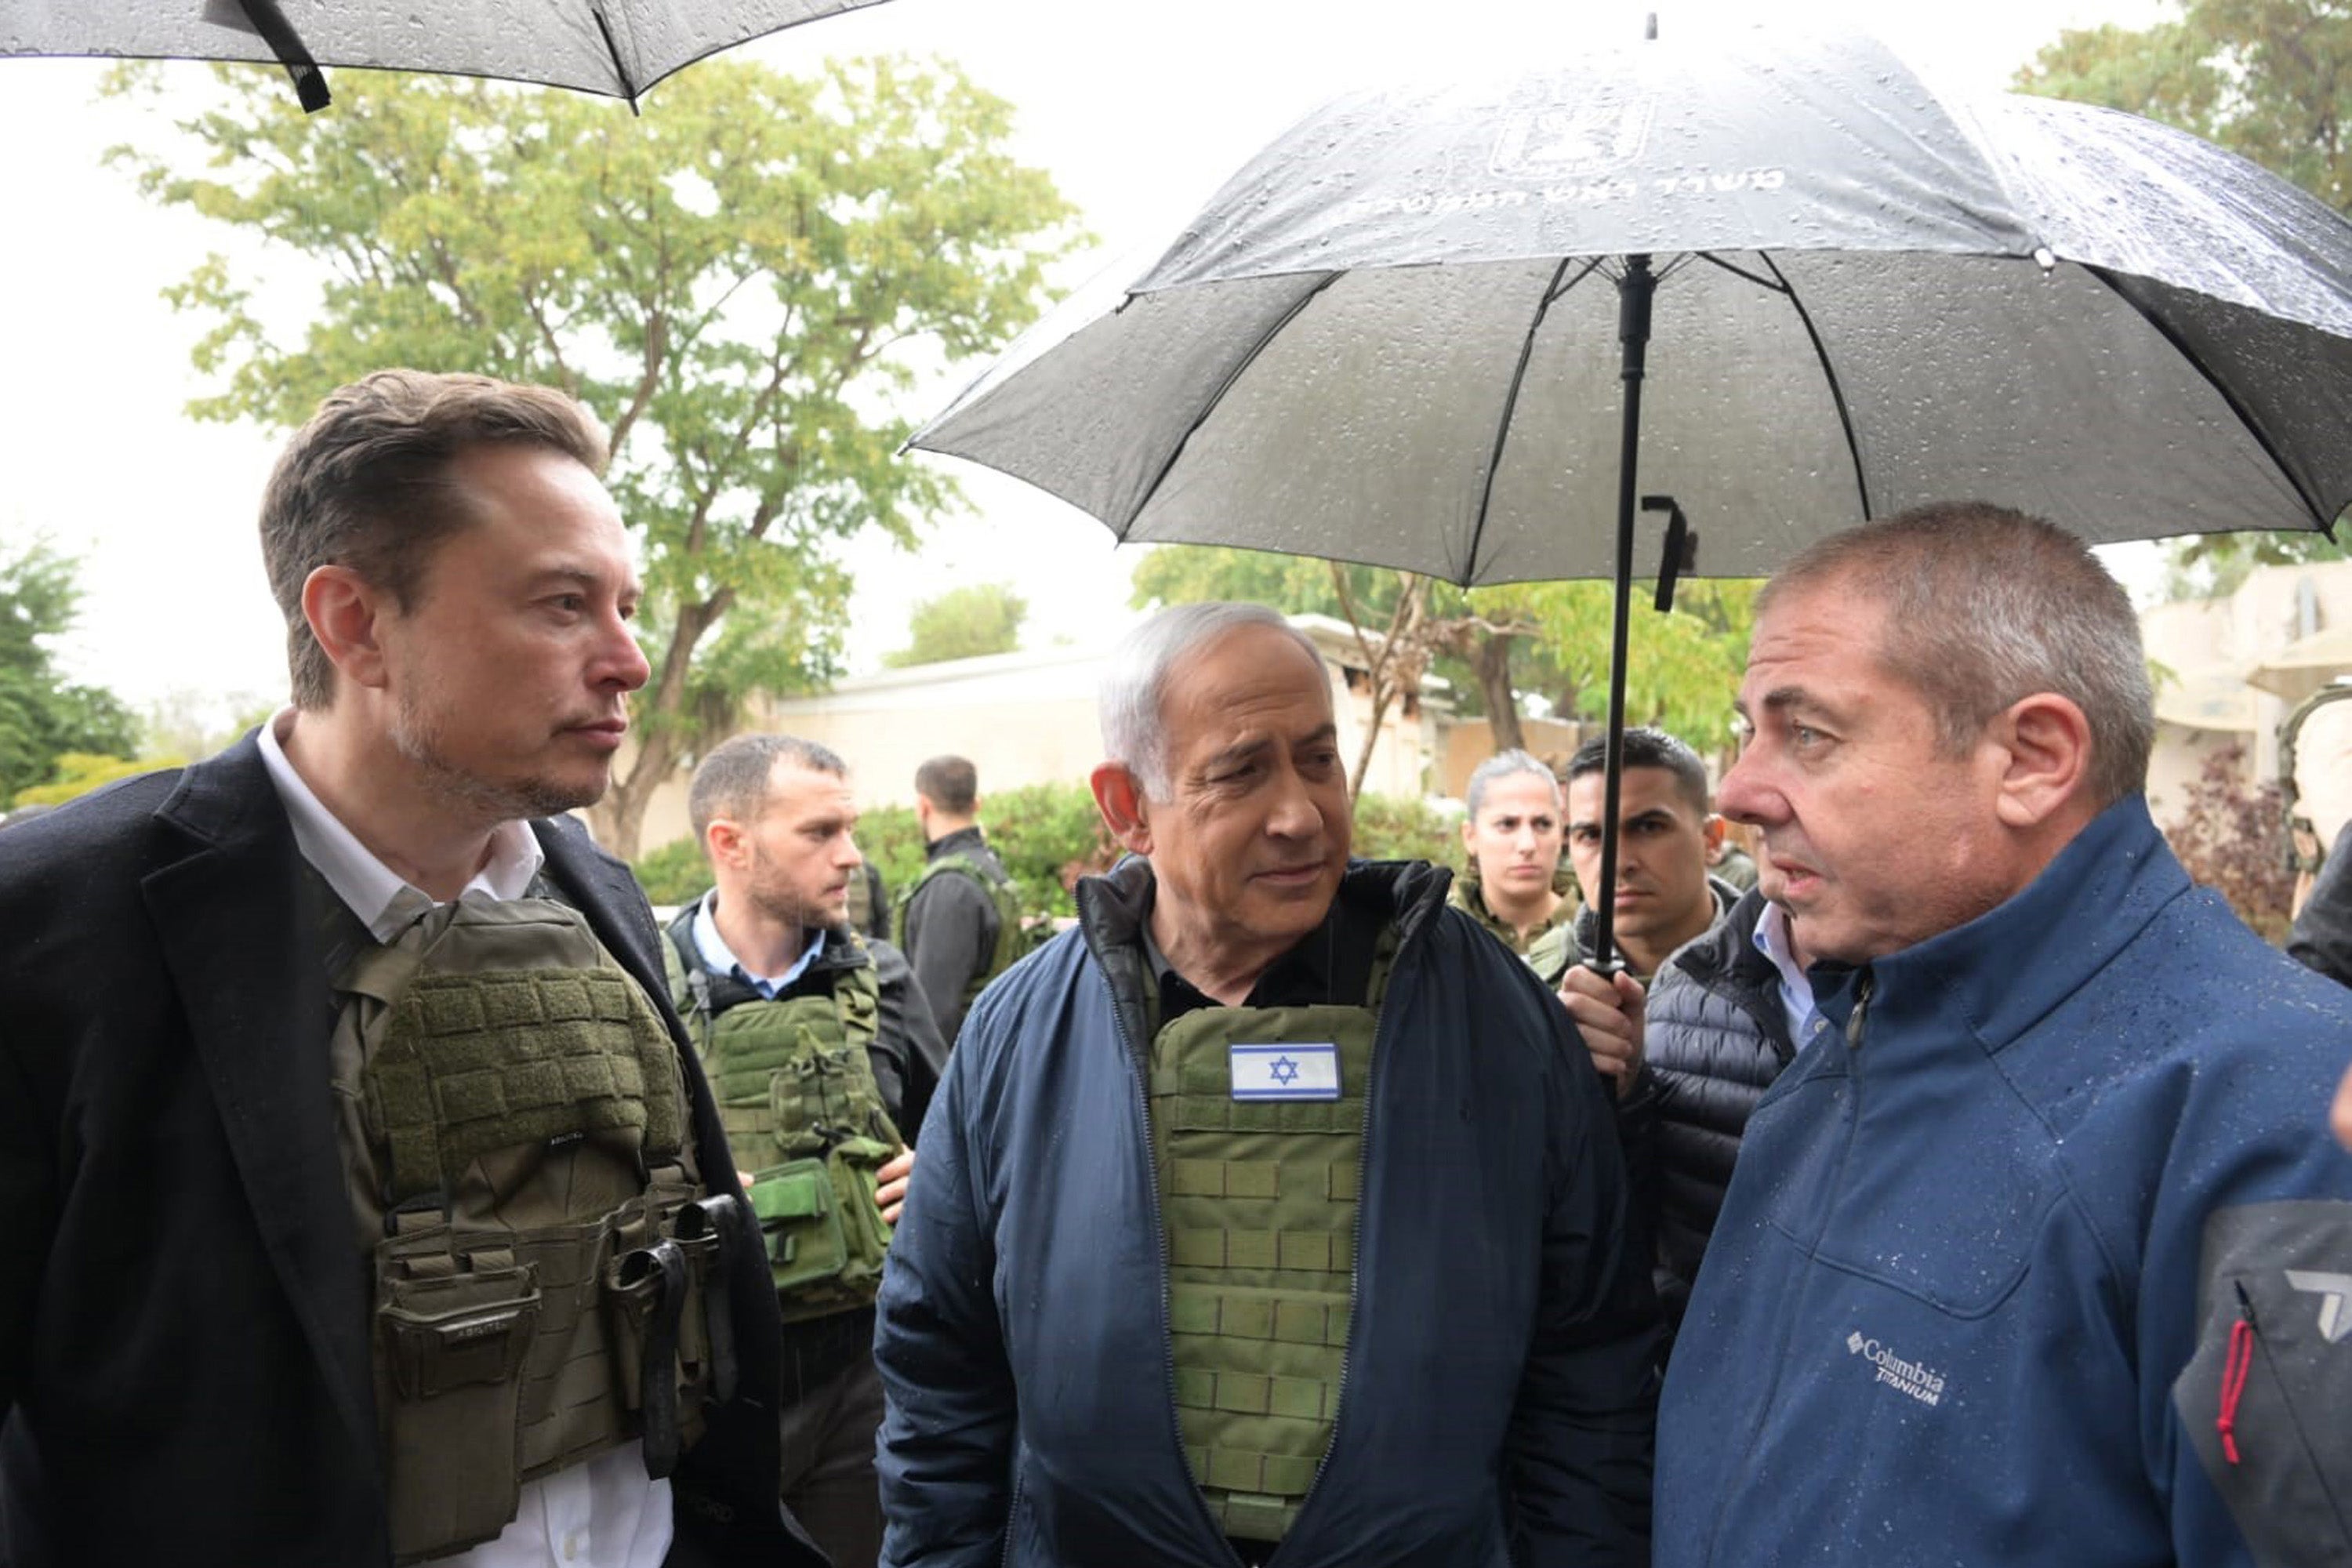 Musk and Netanyahu in bulletproof vests listening to an older man speak, under an umbrella.